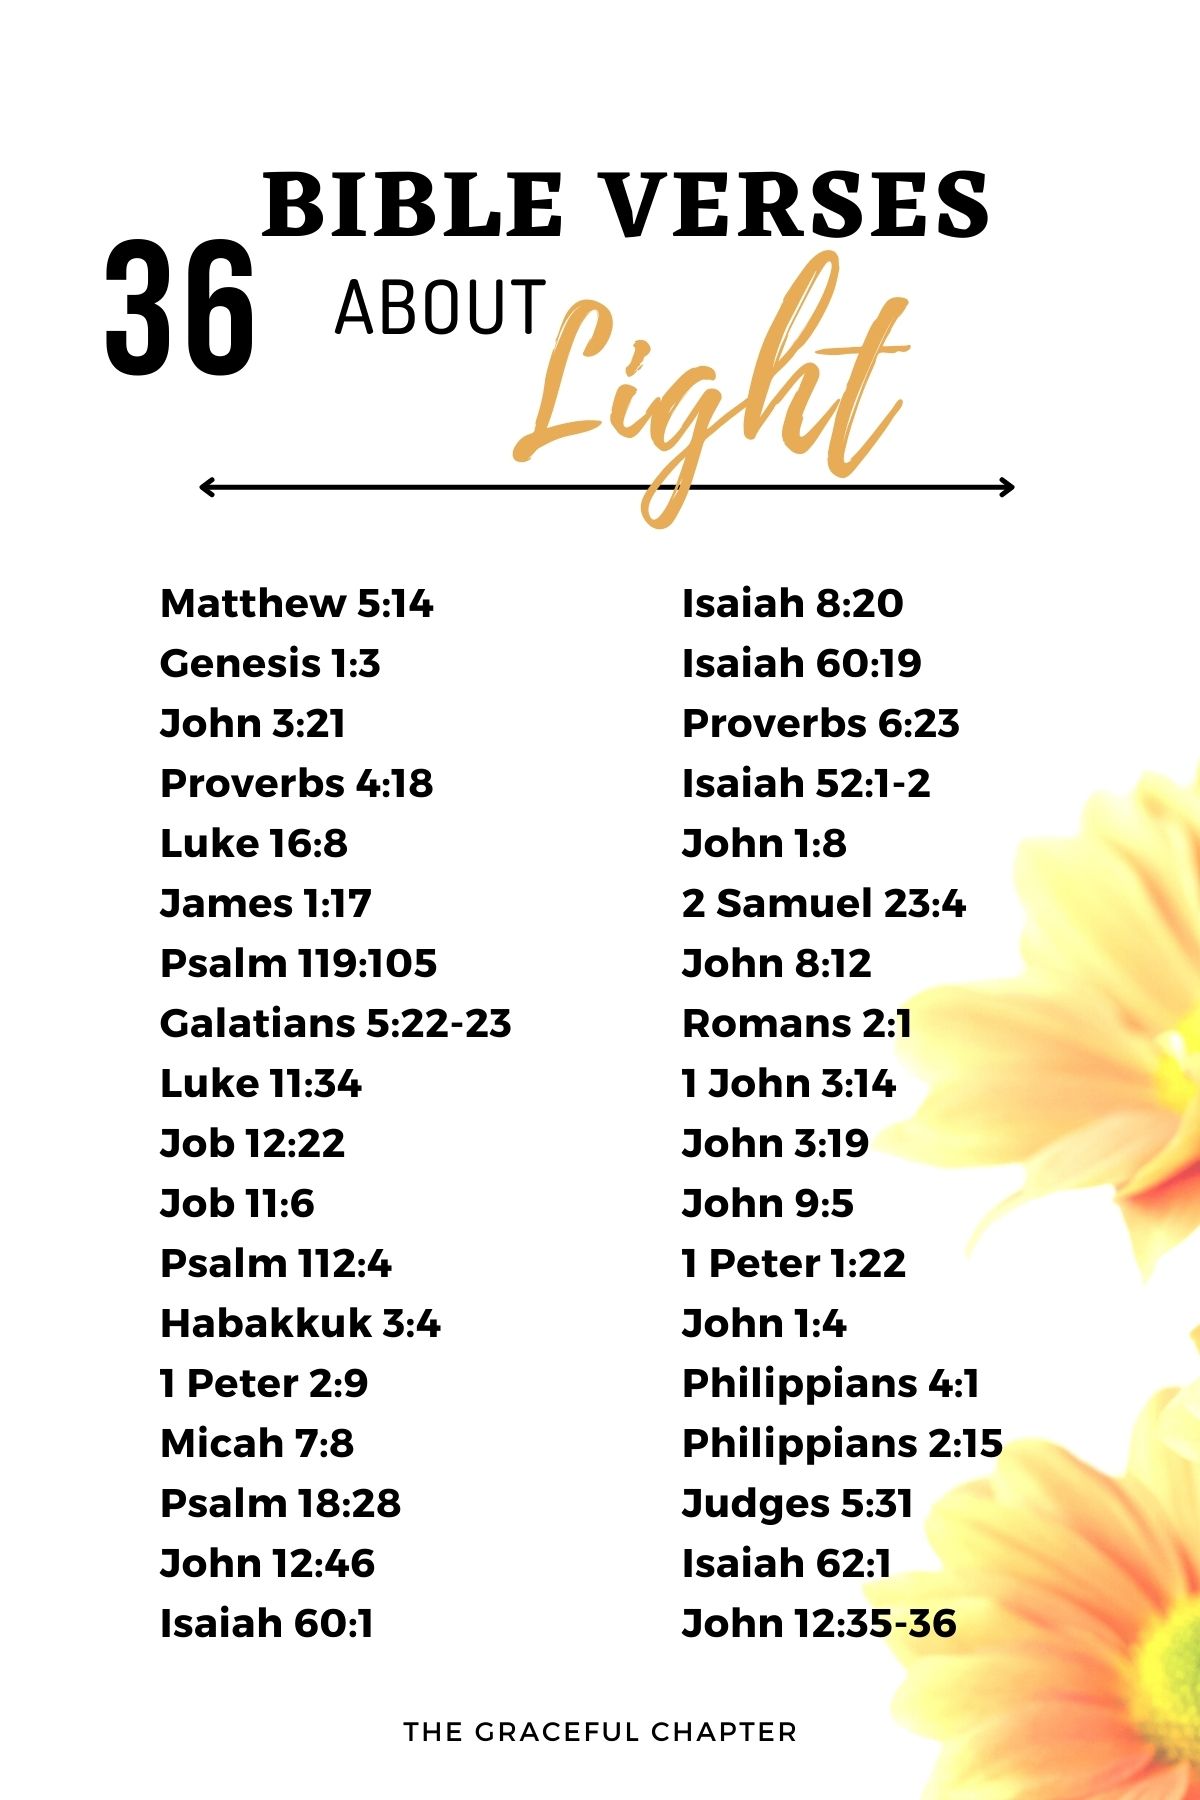 36 bible verses about light